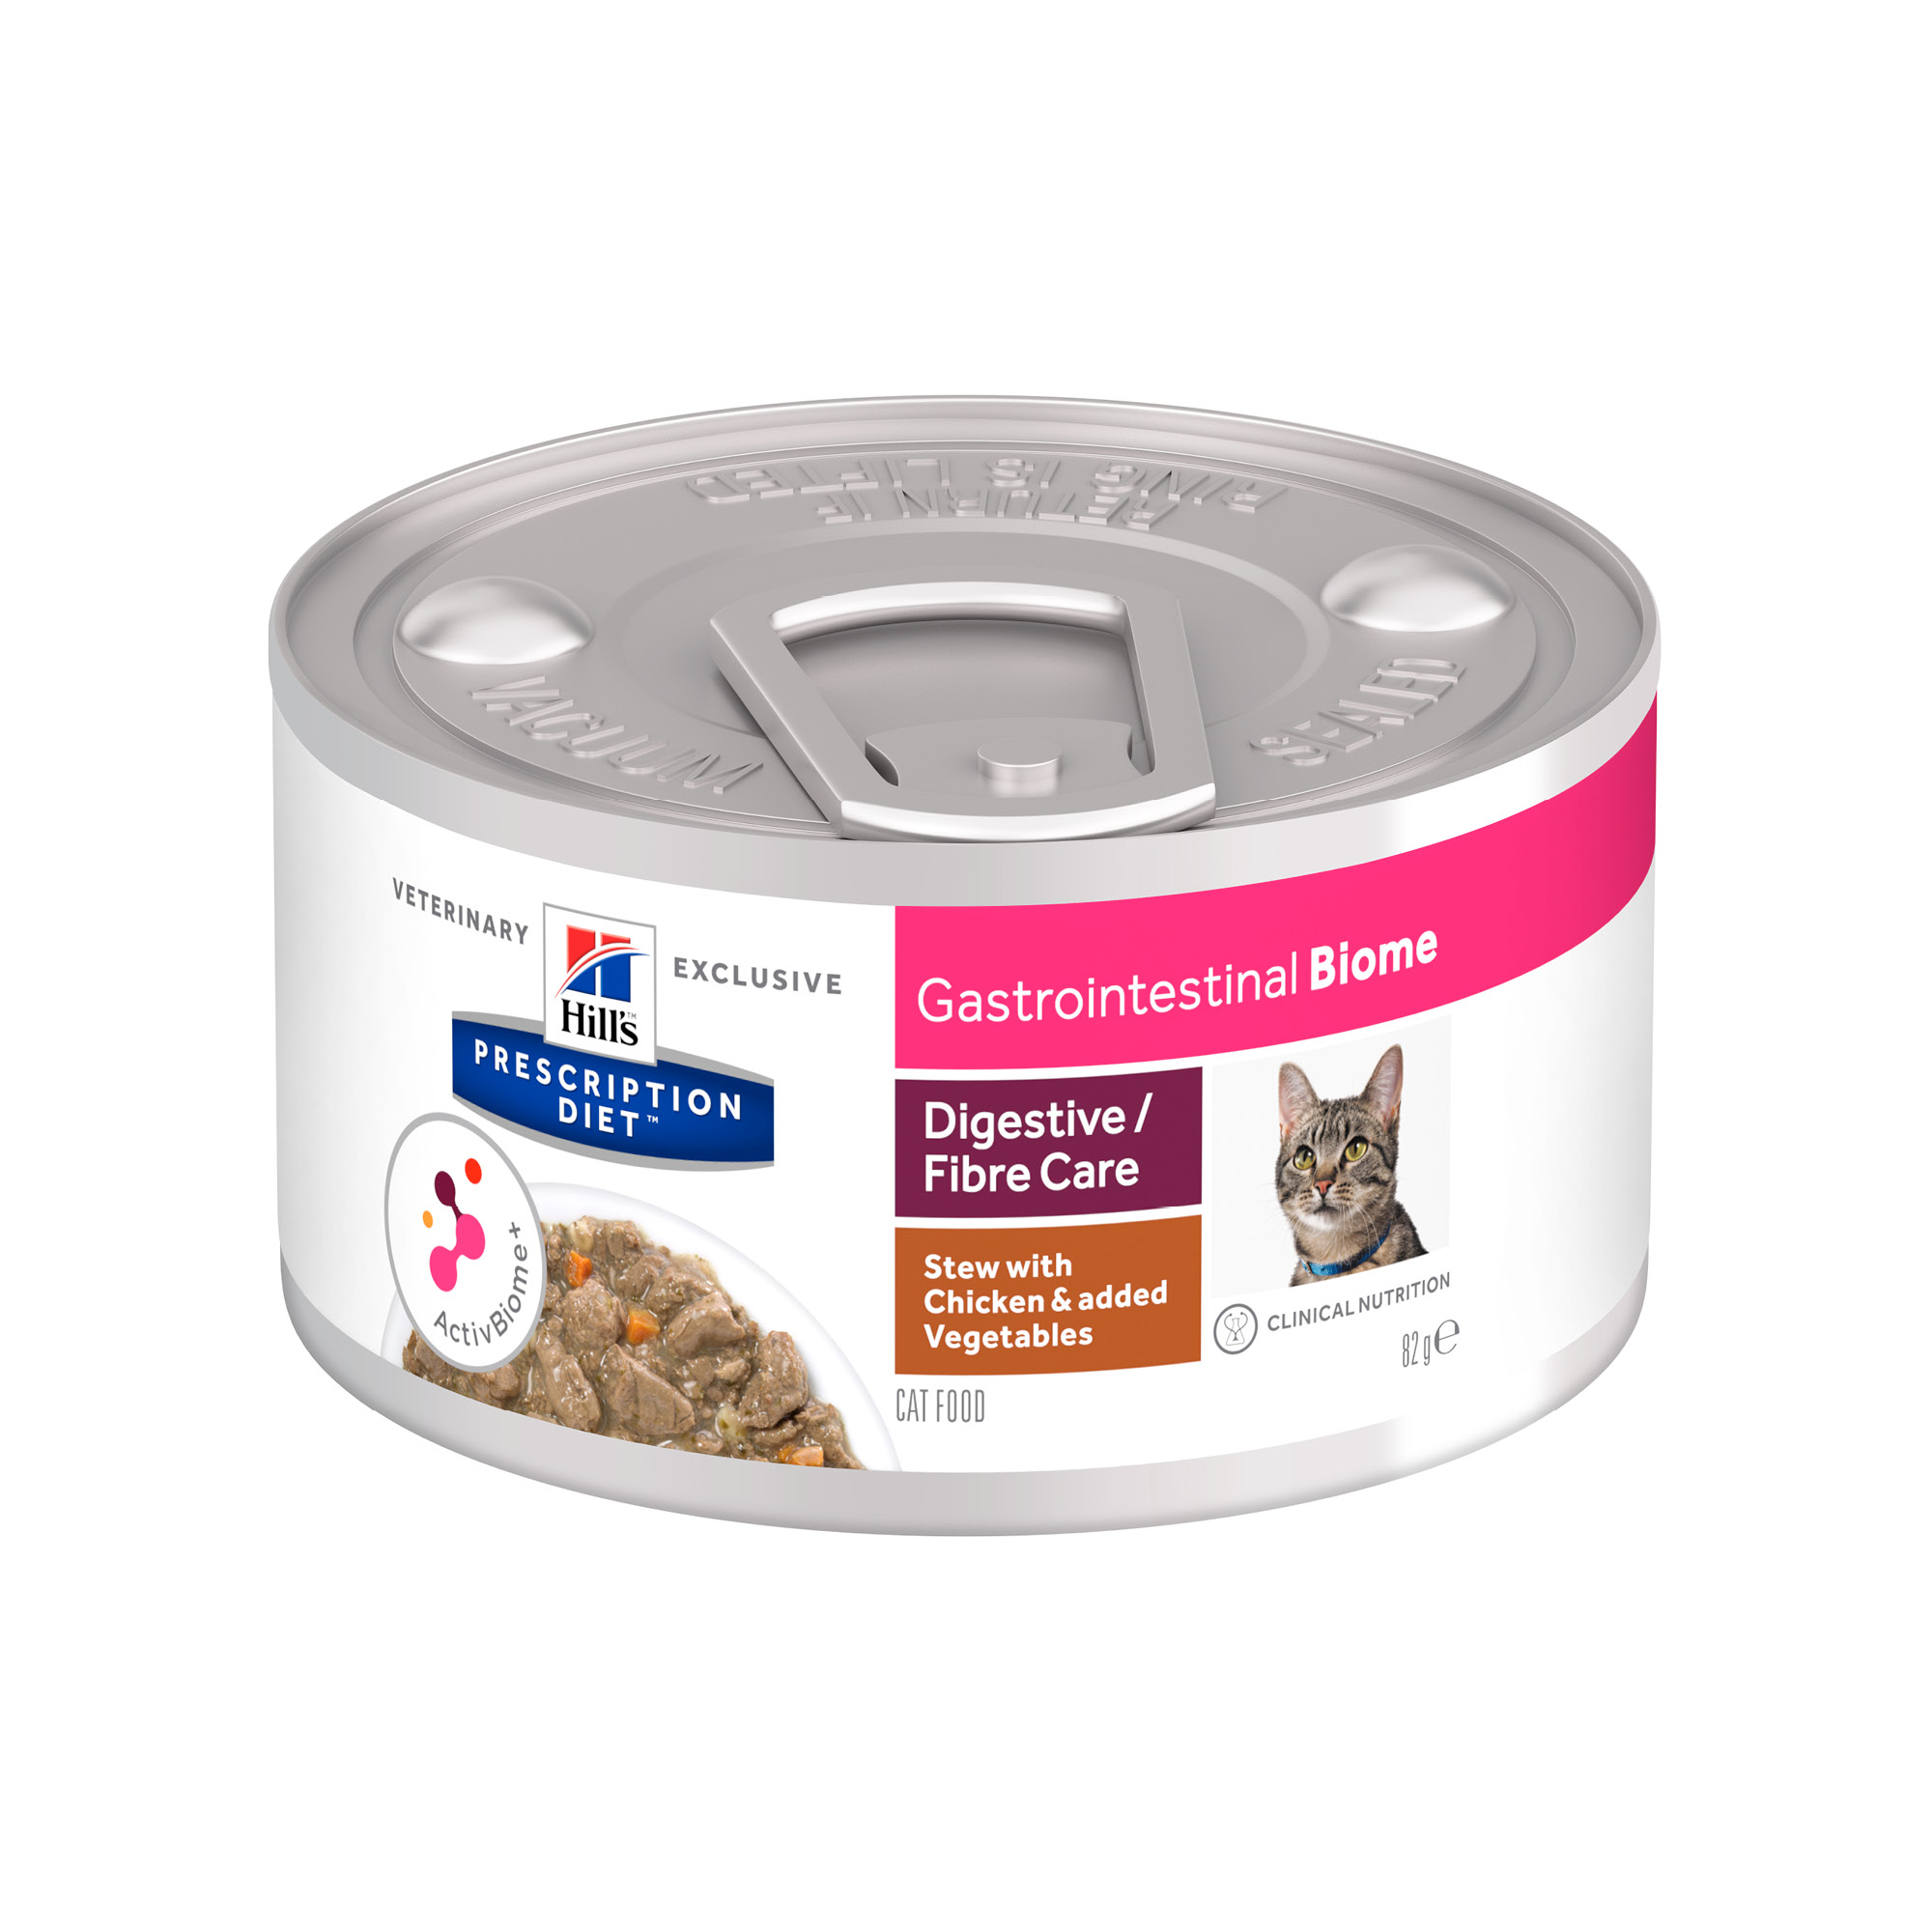  Hill's Gastrointestinal Biome рагу корм для кошек 82 г